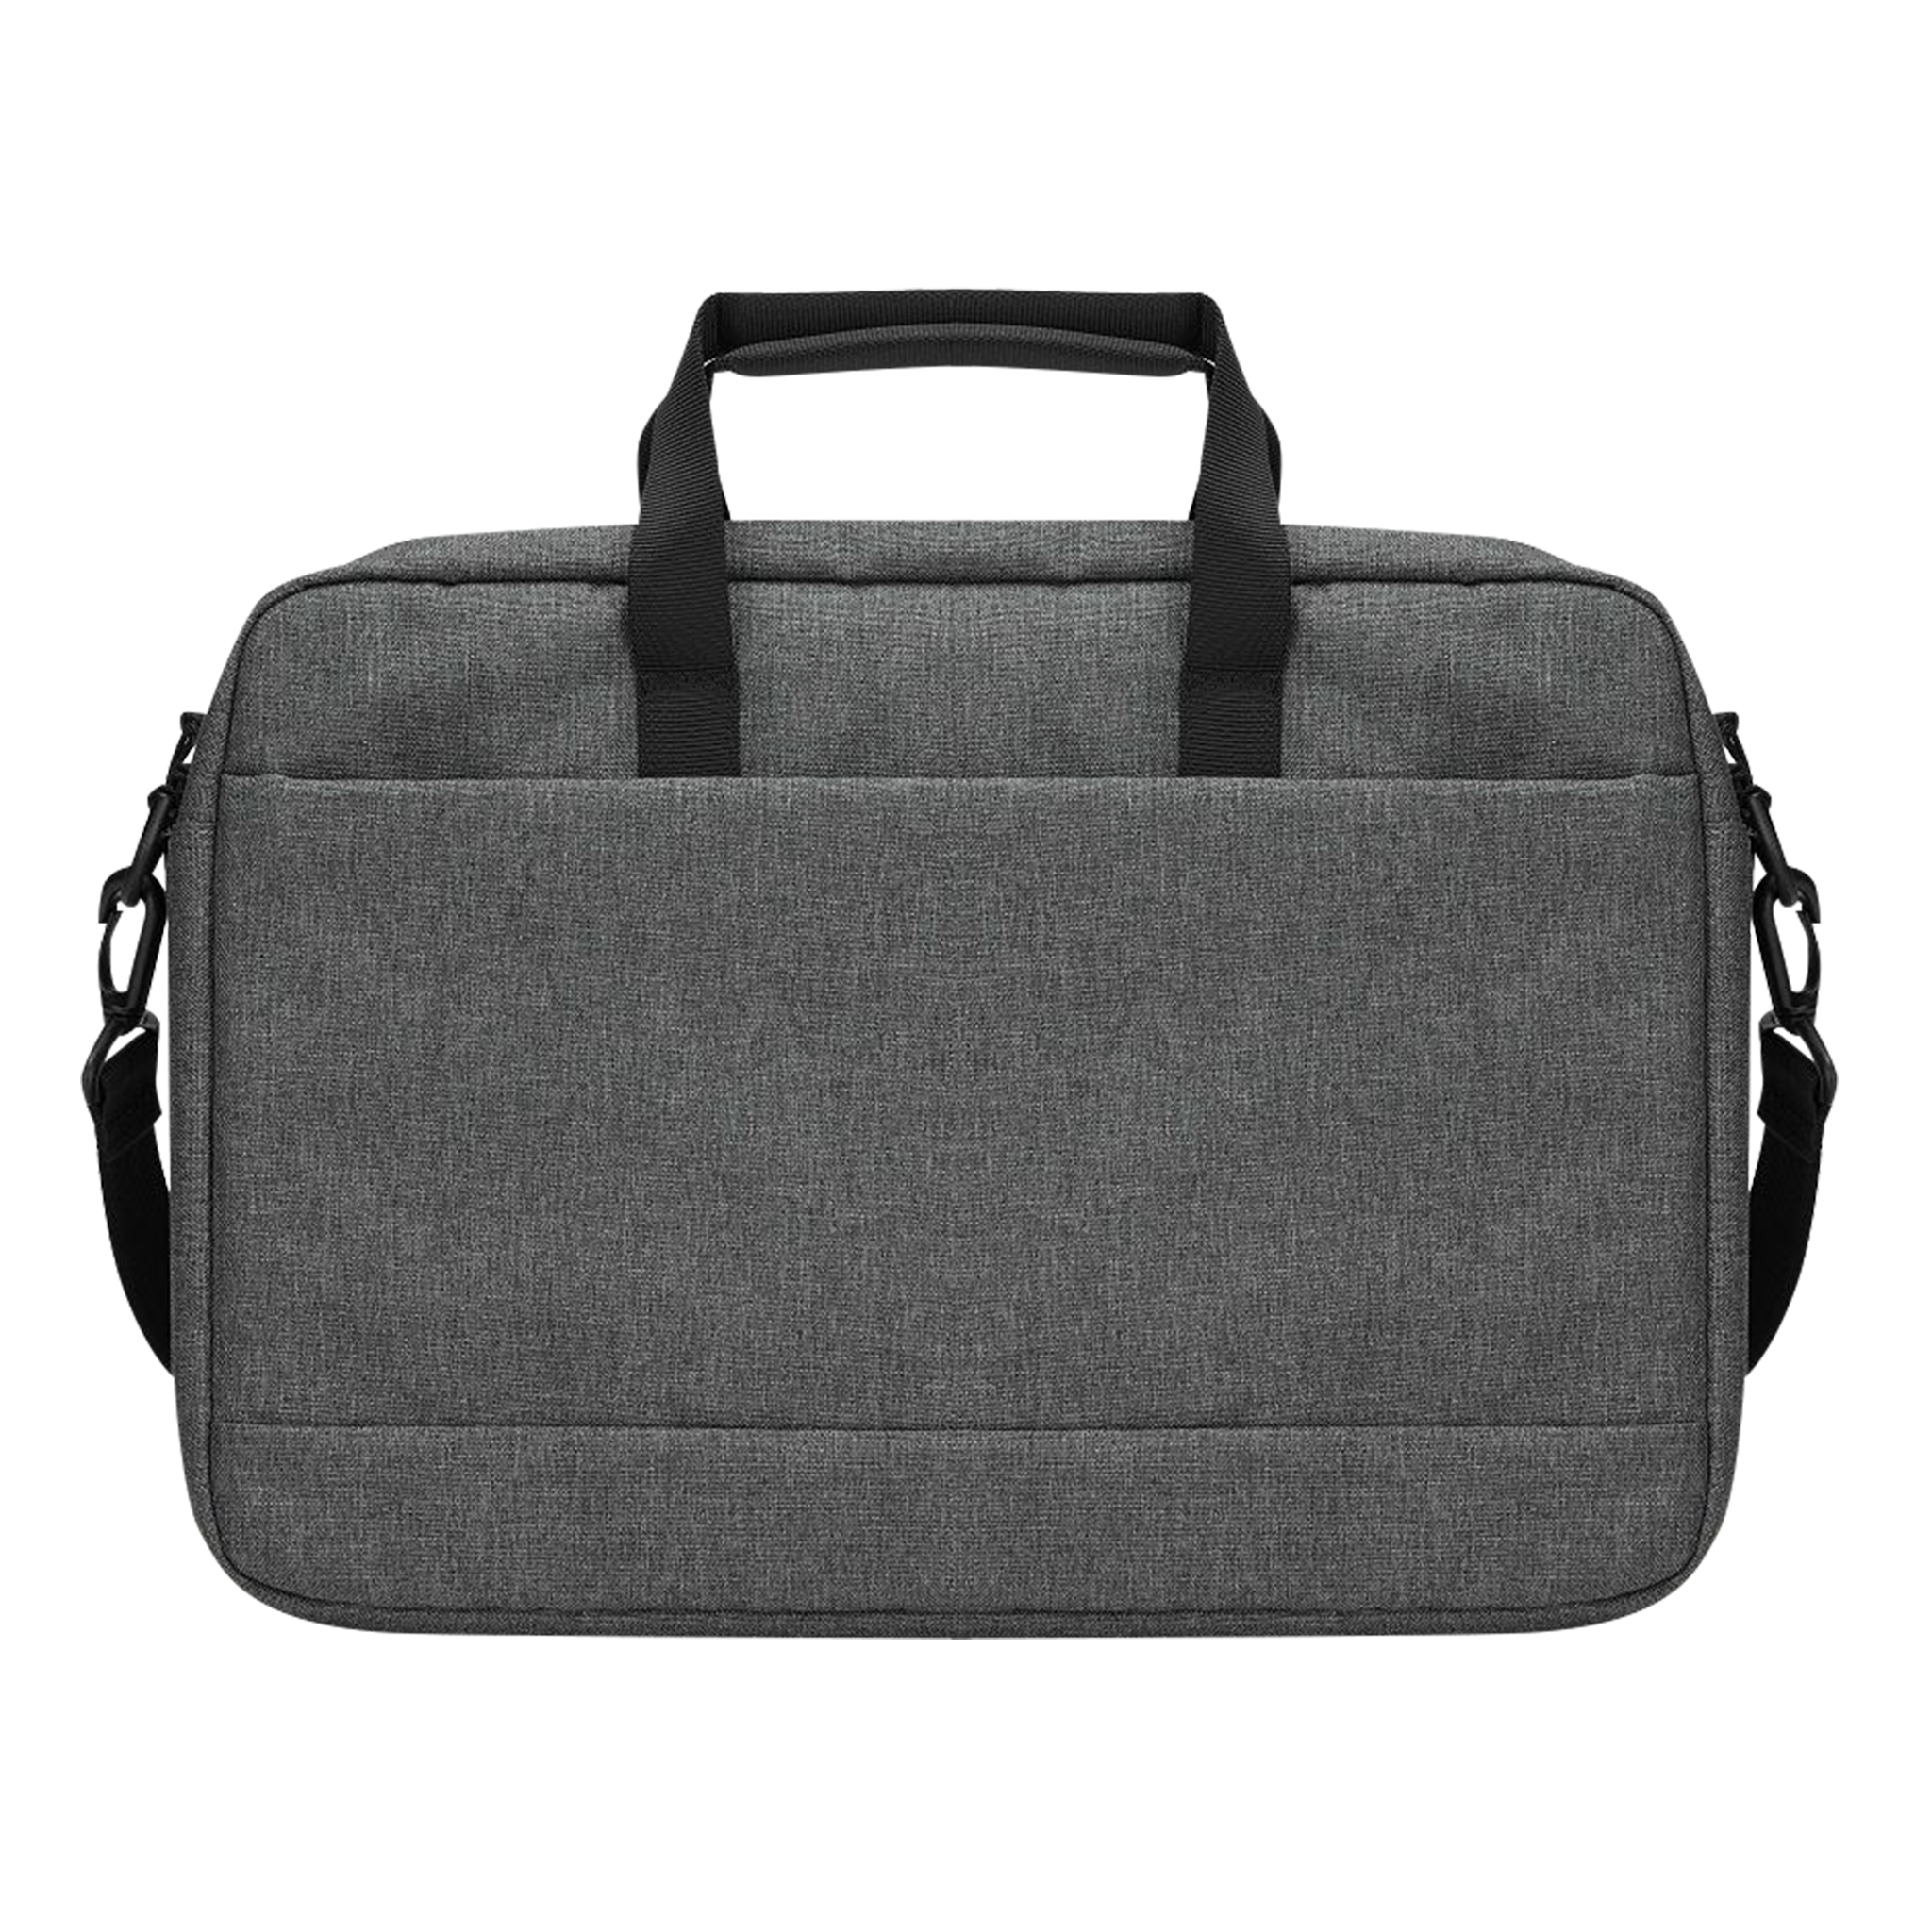 Laptop Bag (LP18)